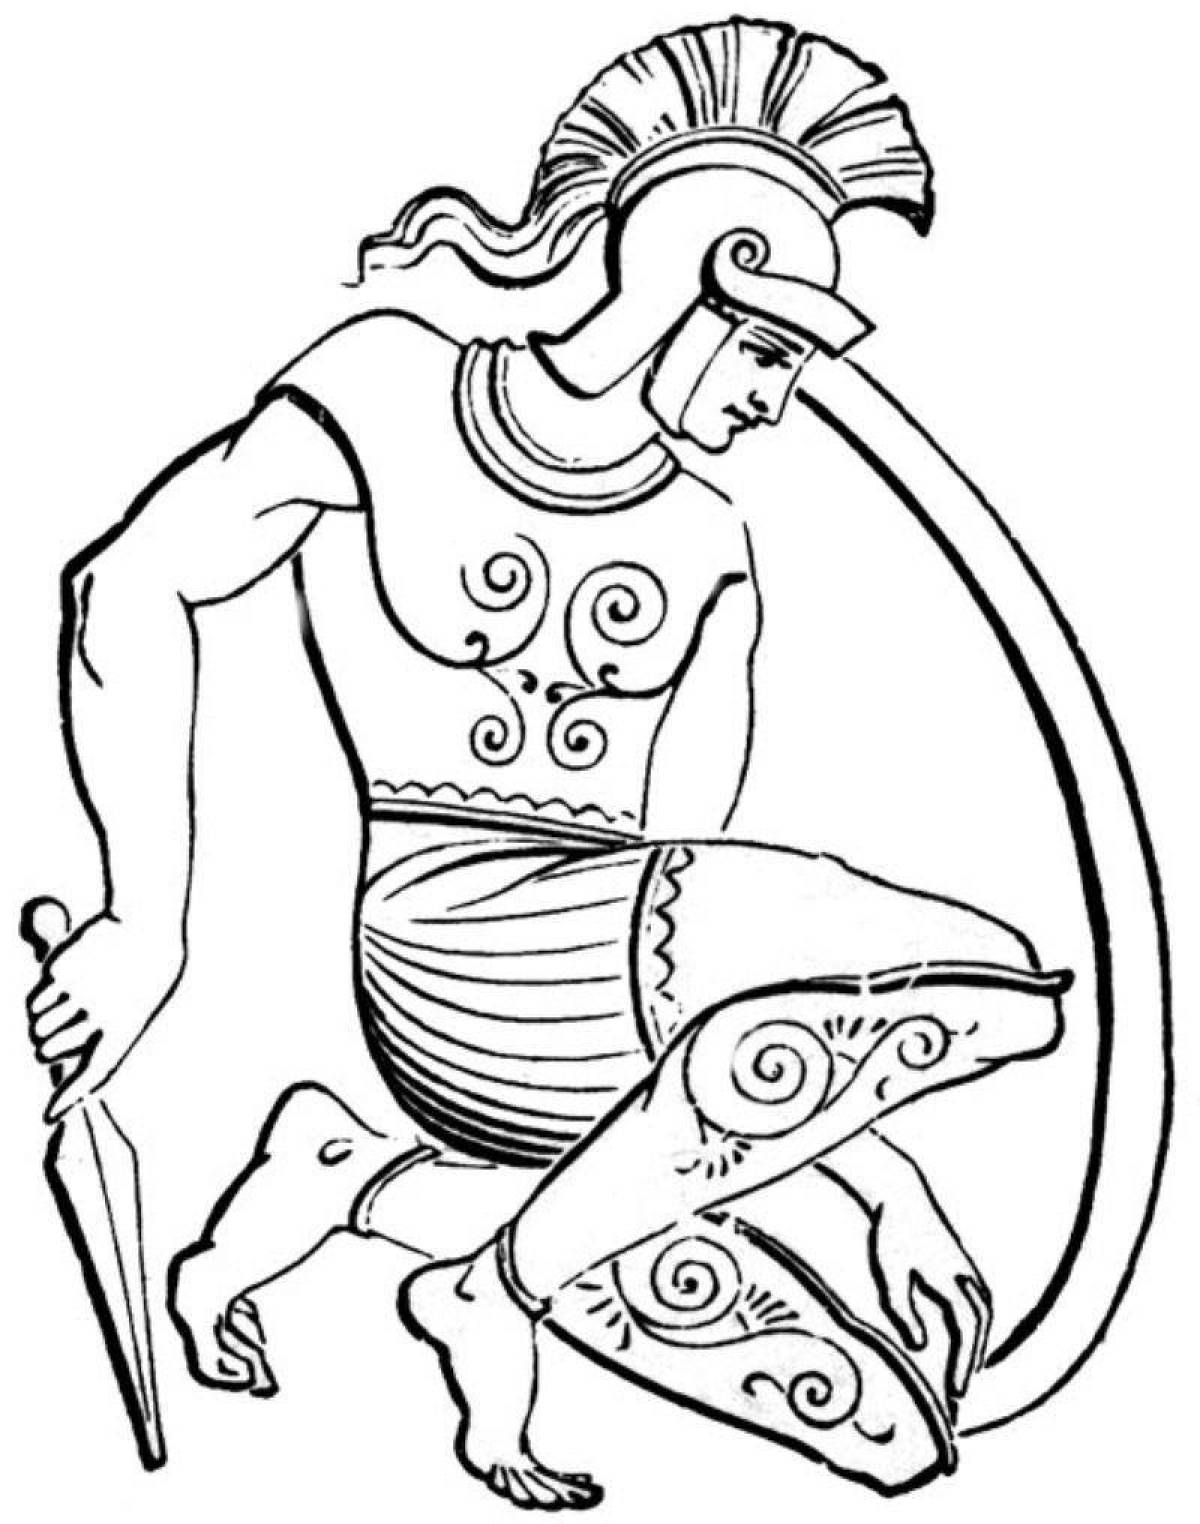 Wonderful coloring of ancient Greek myths